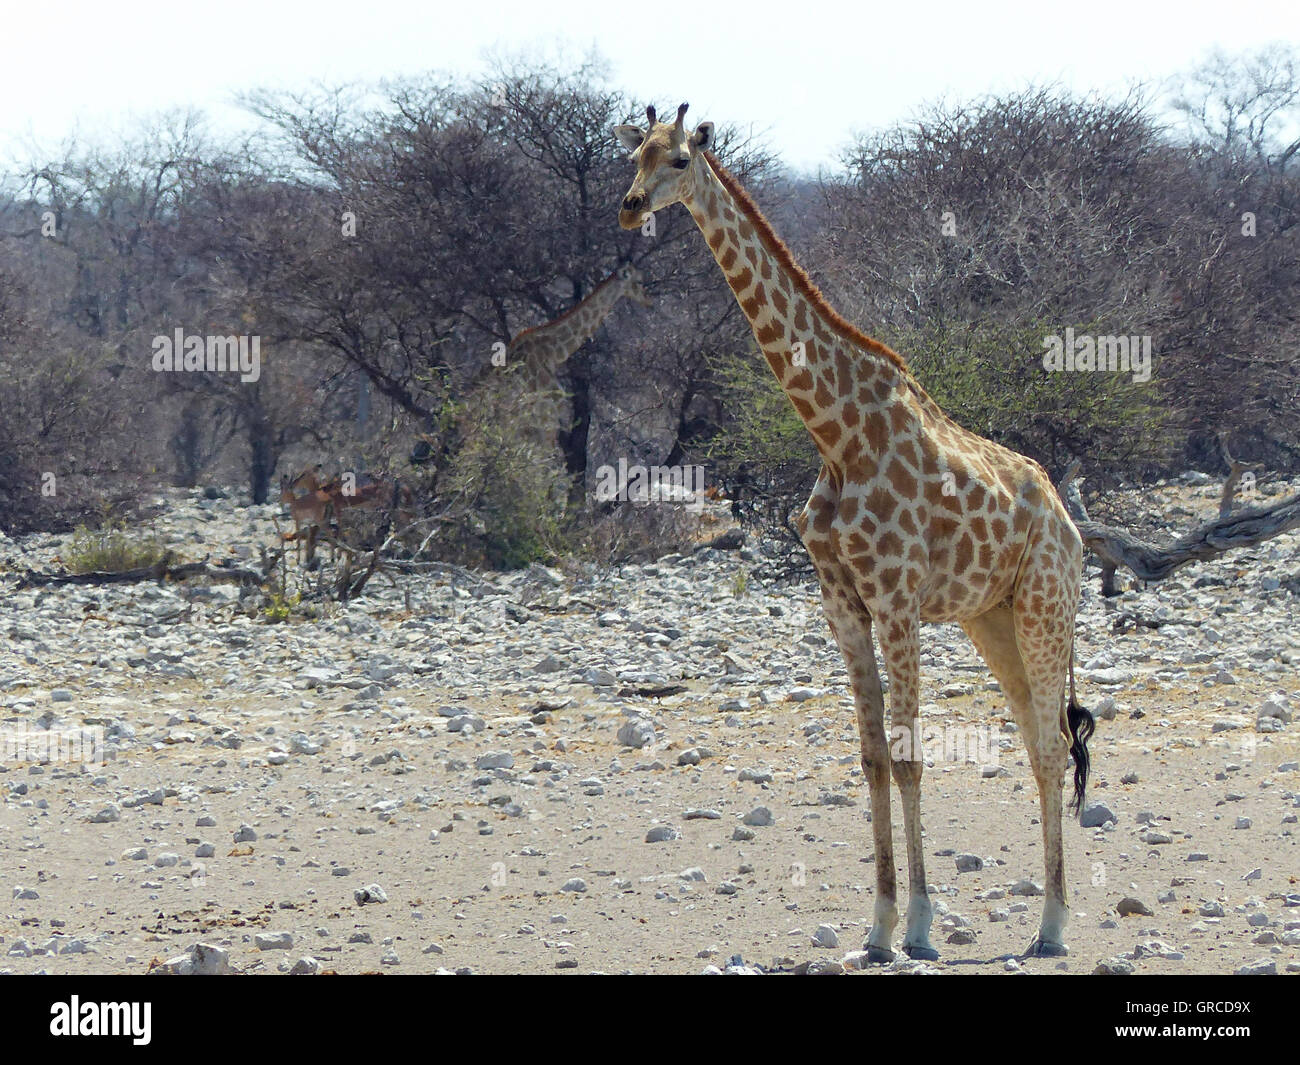 Giraffe In The Wild Stock Photo